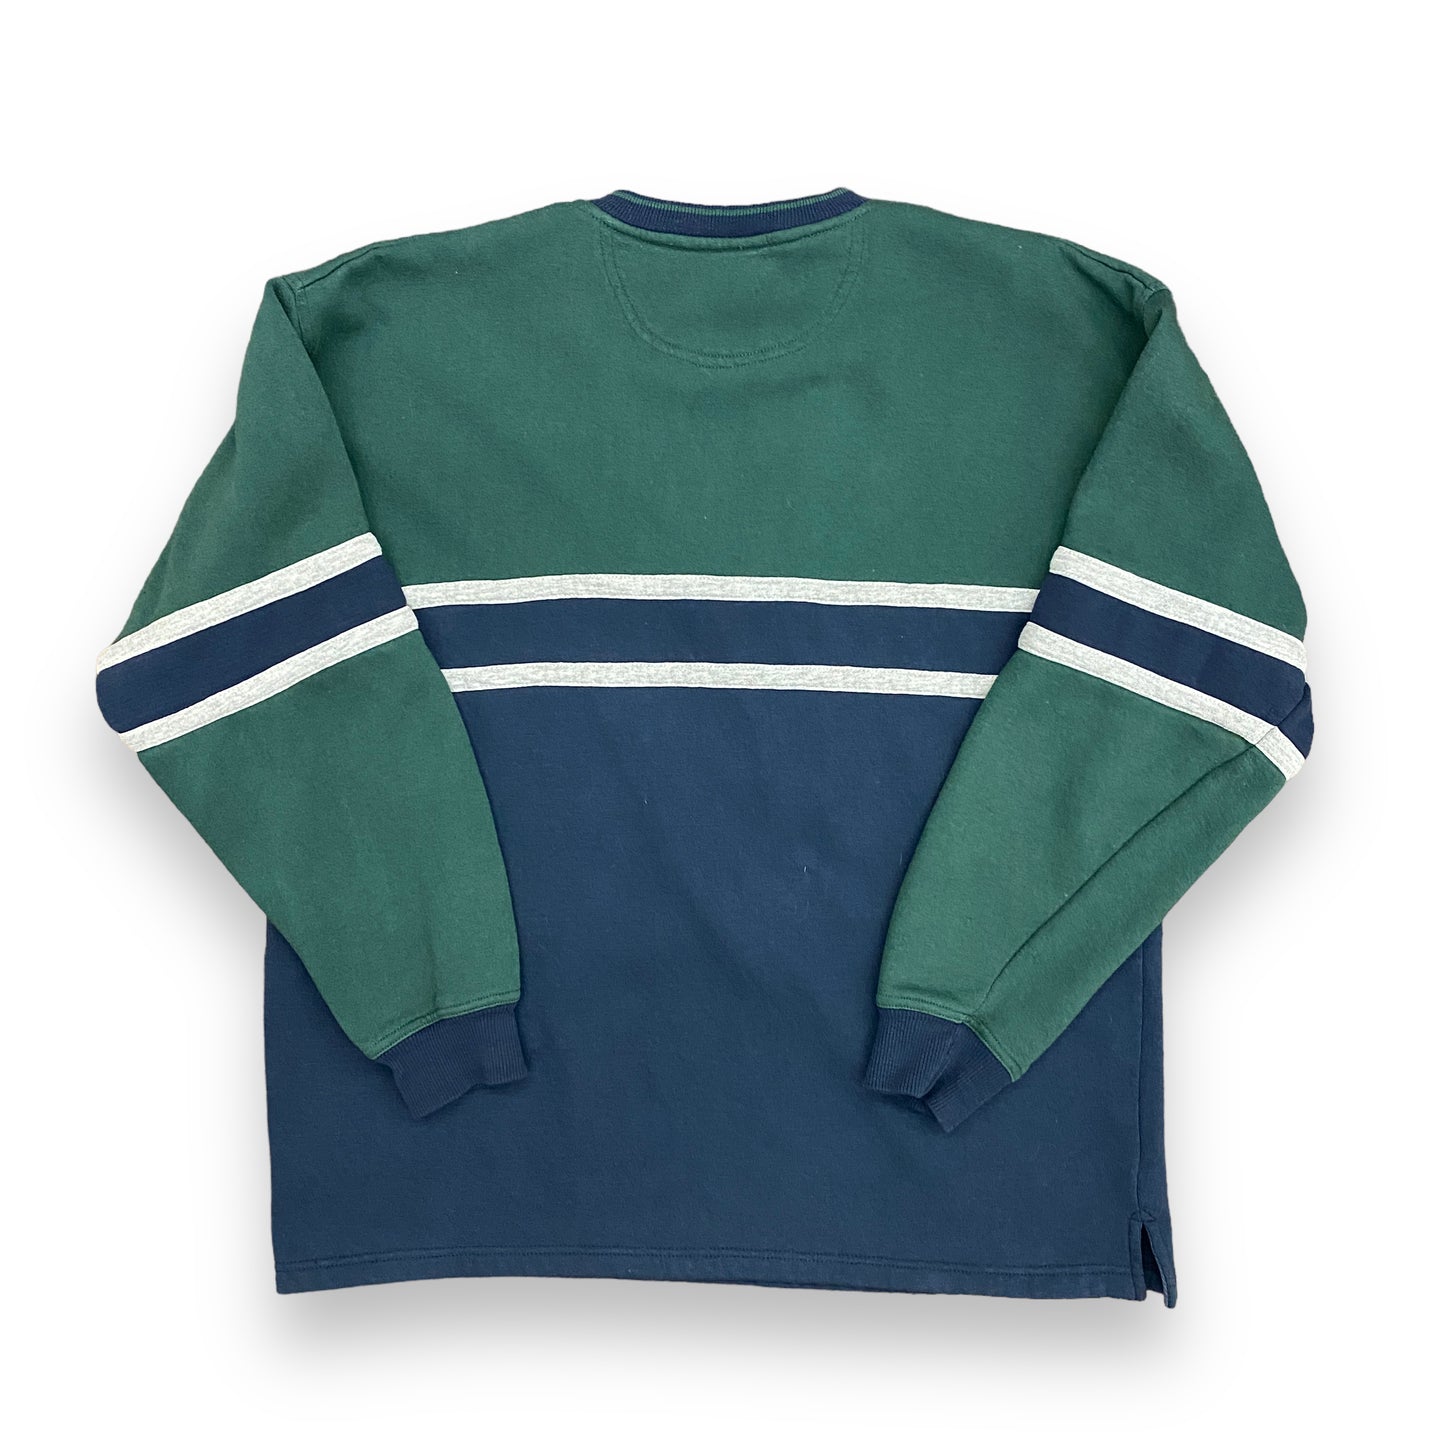 1990s Green & Blue Henley Sweatshirt - Size Large